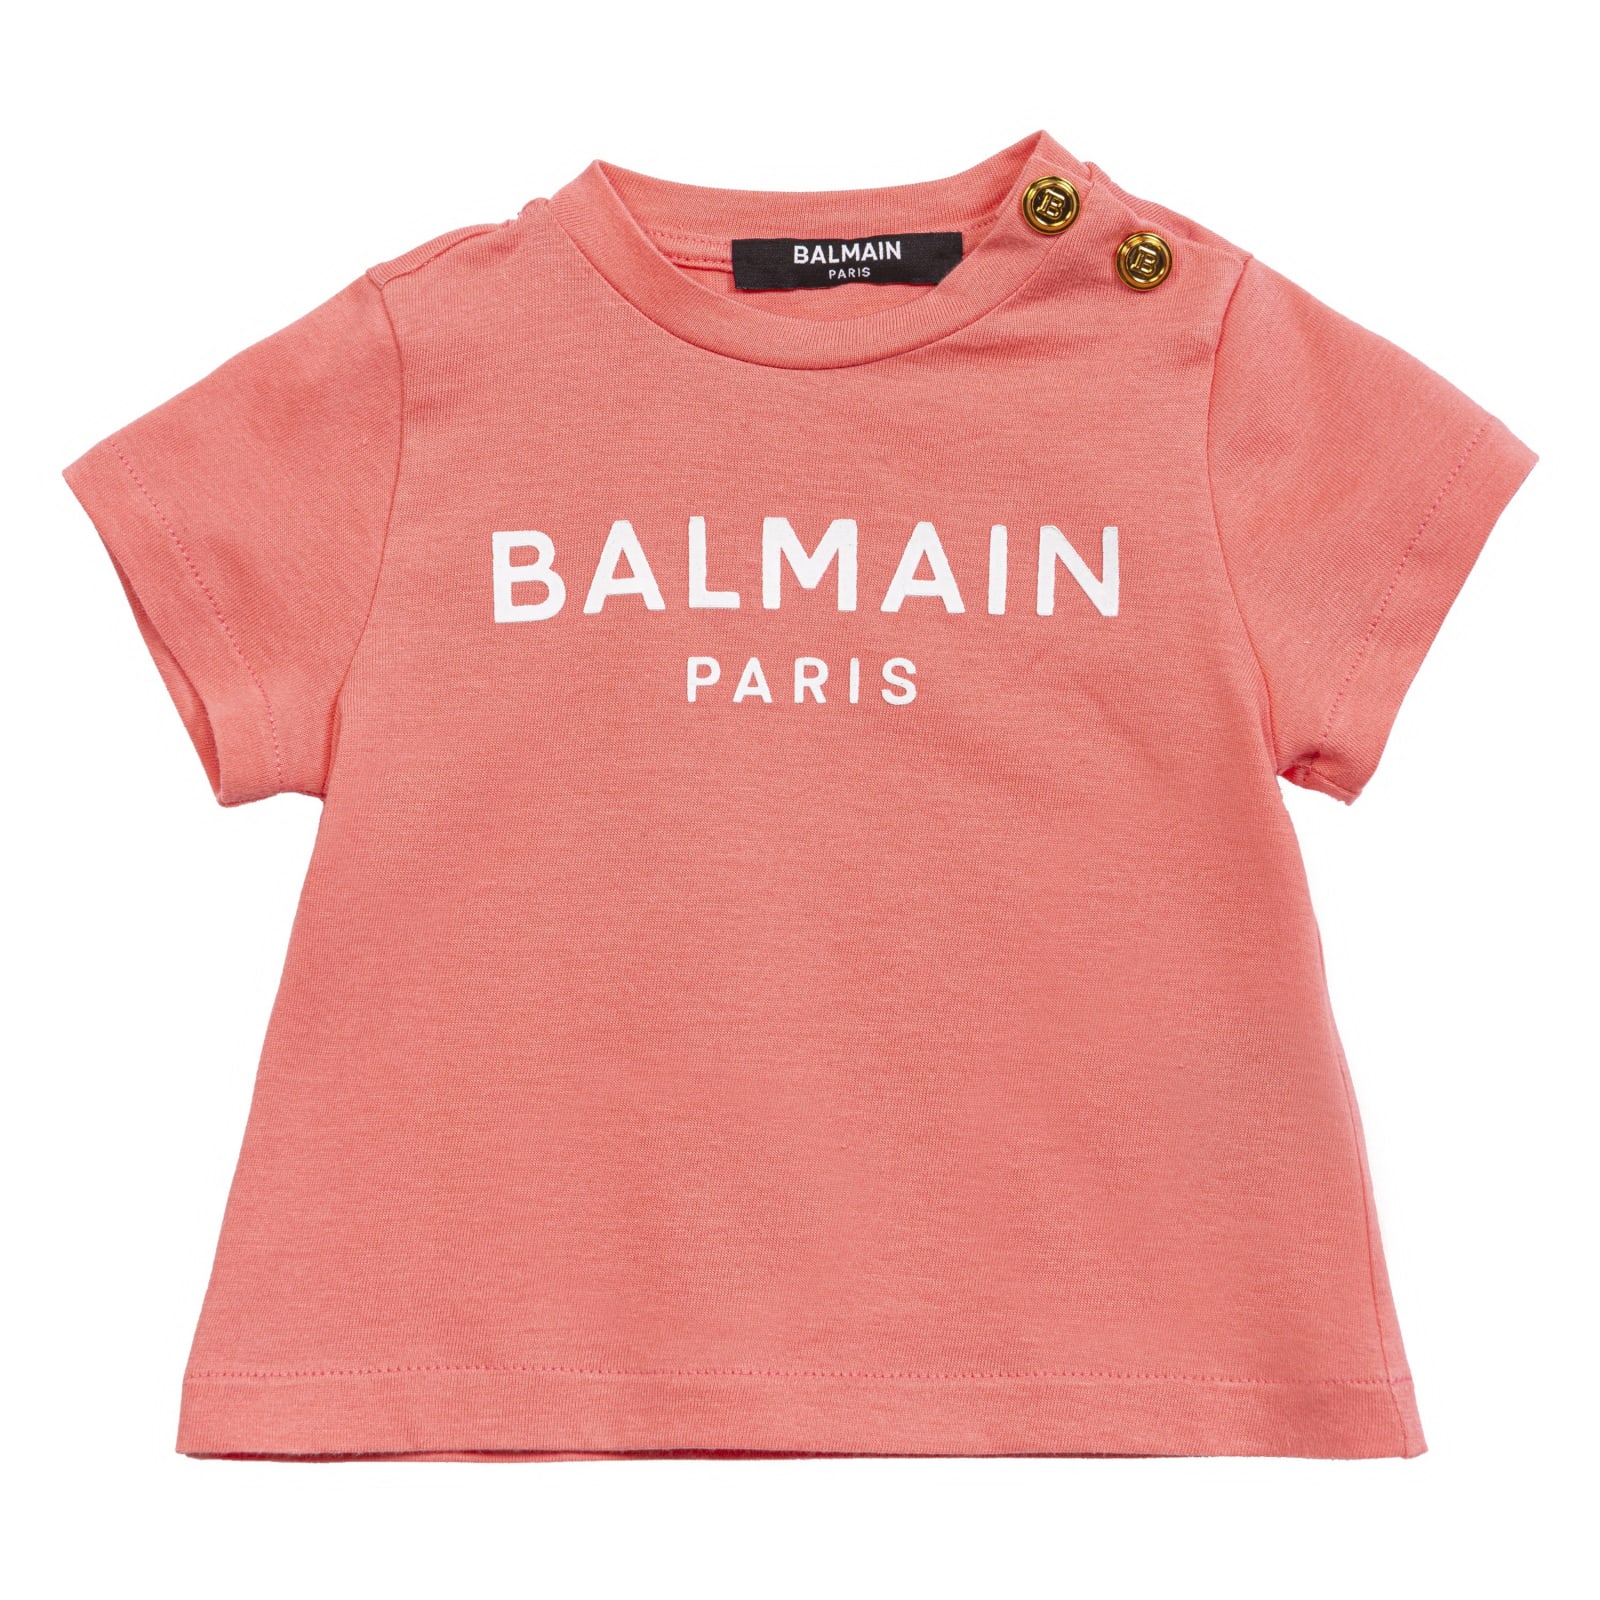 Balmain Babies' T-shirt With Print In Coral